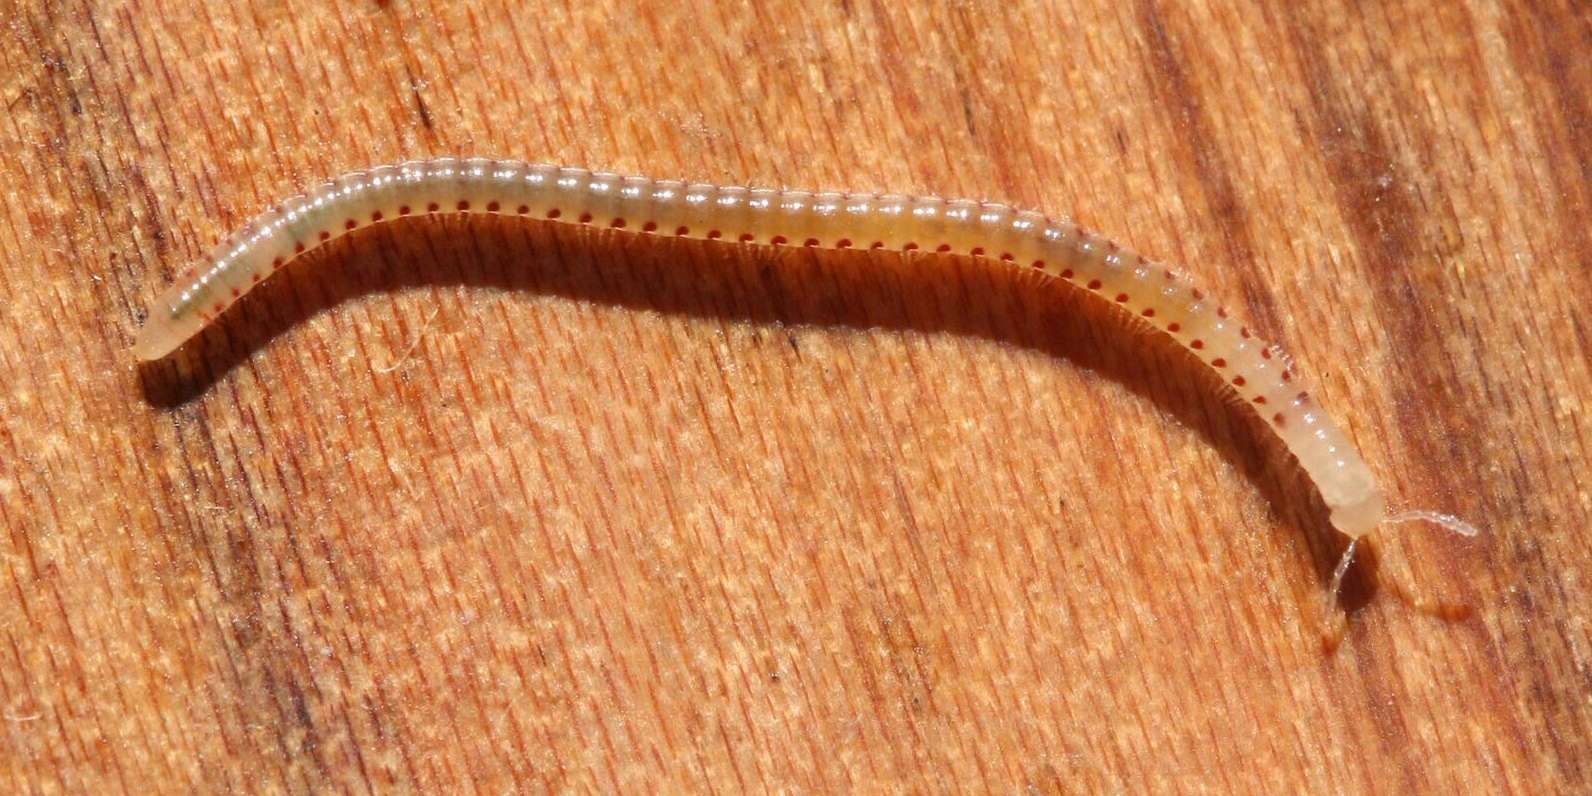 Image of Spotted snake millipede